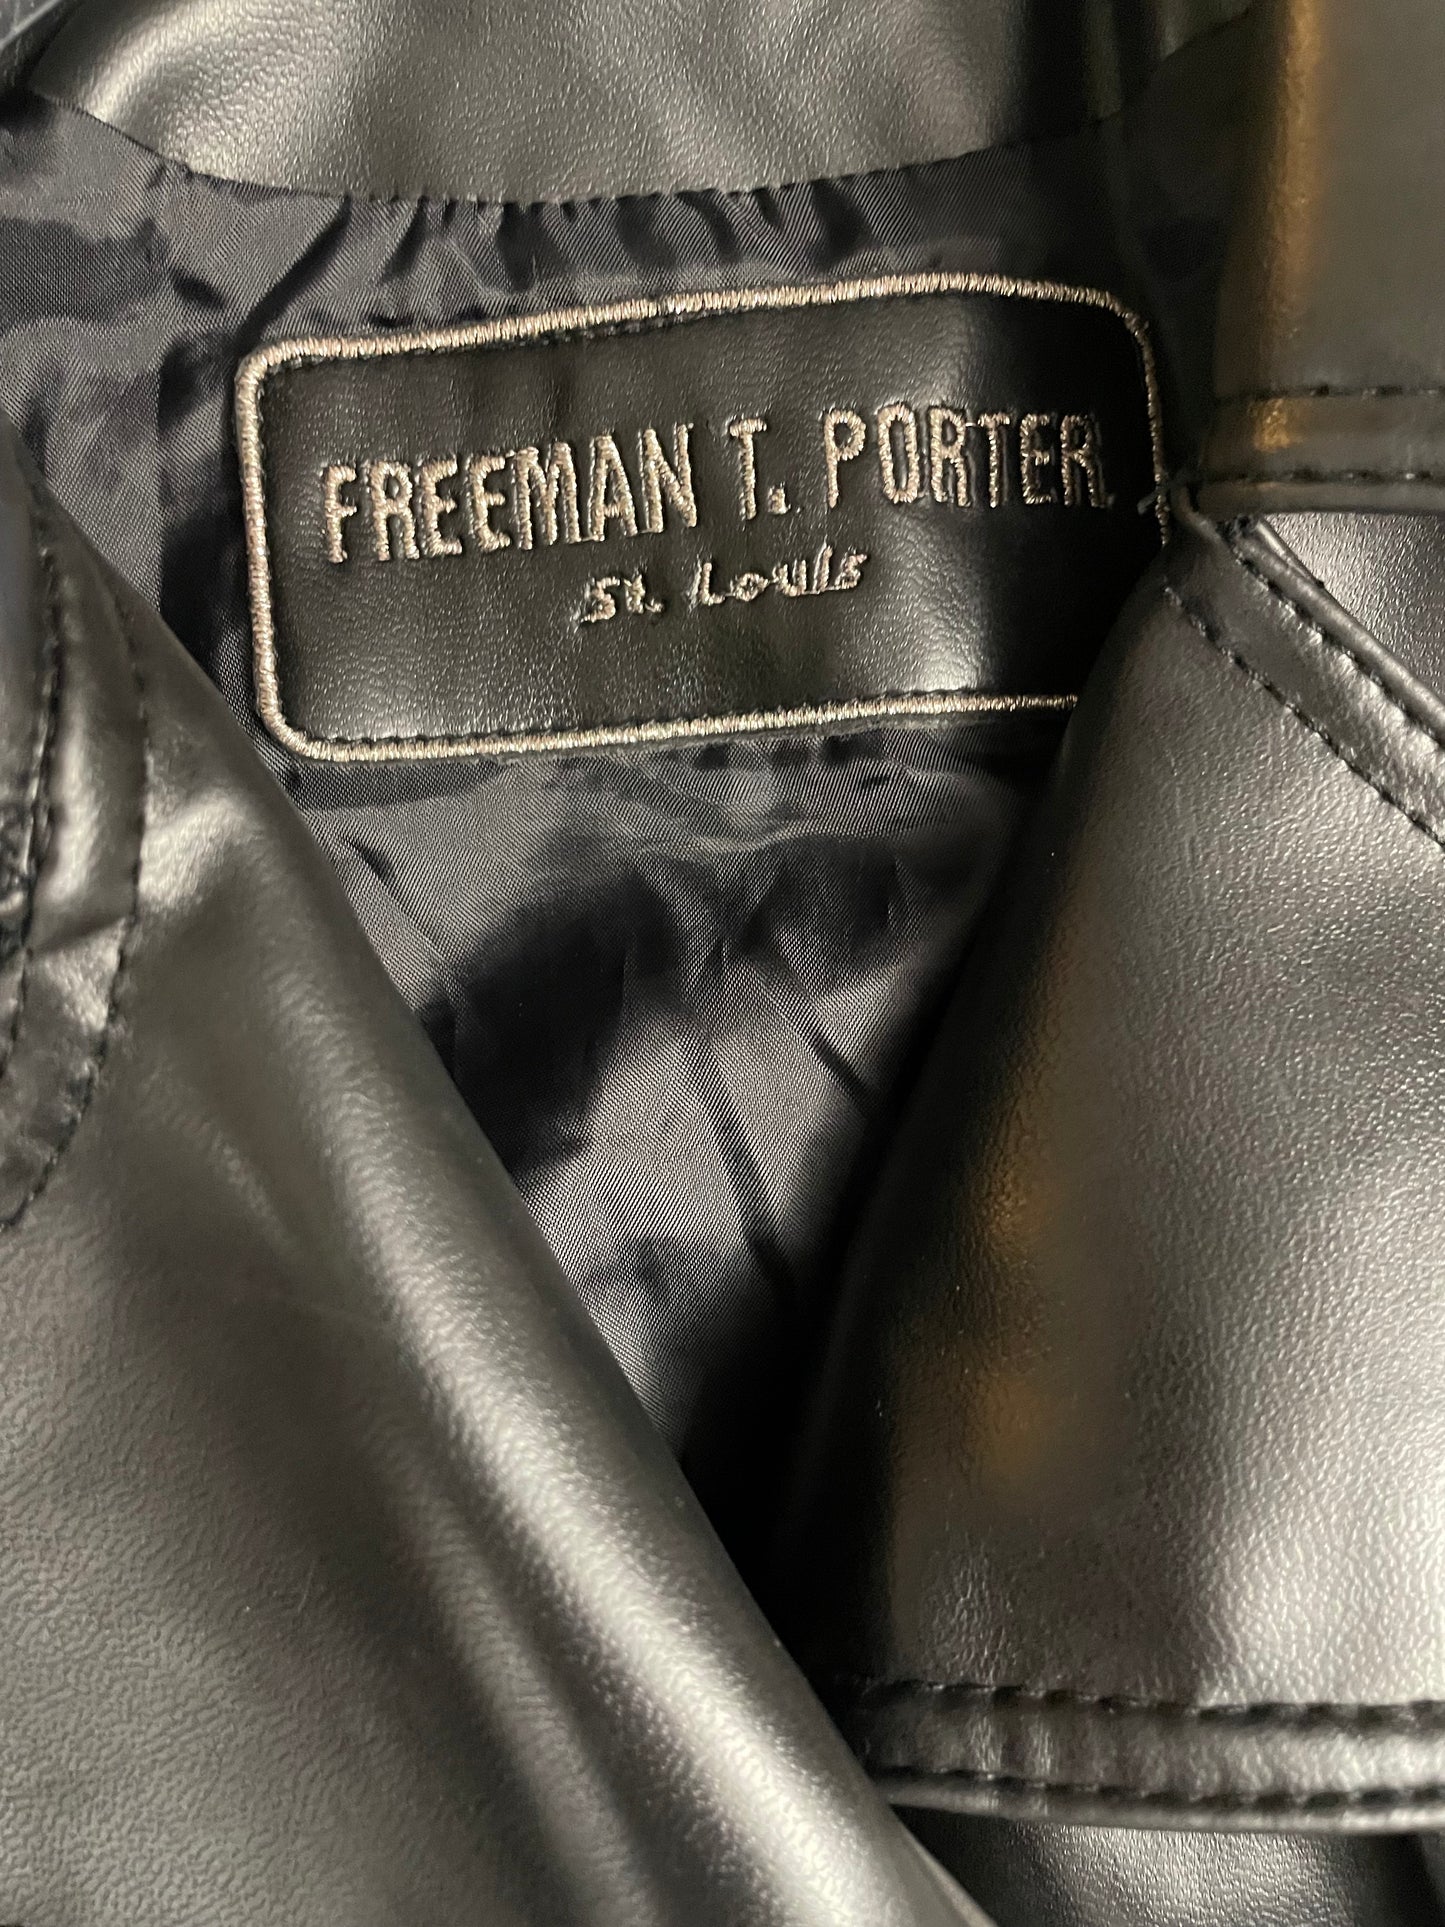 Freeman T. Porter jacket